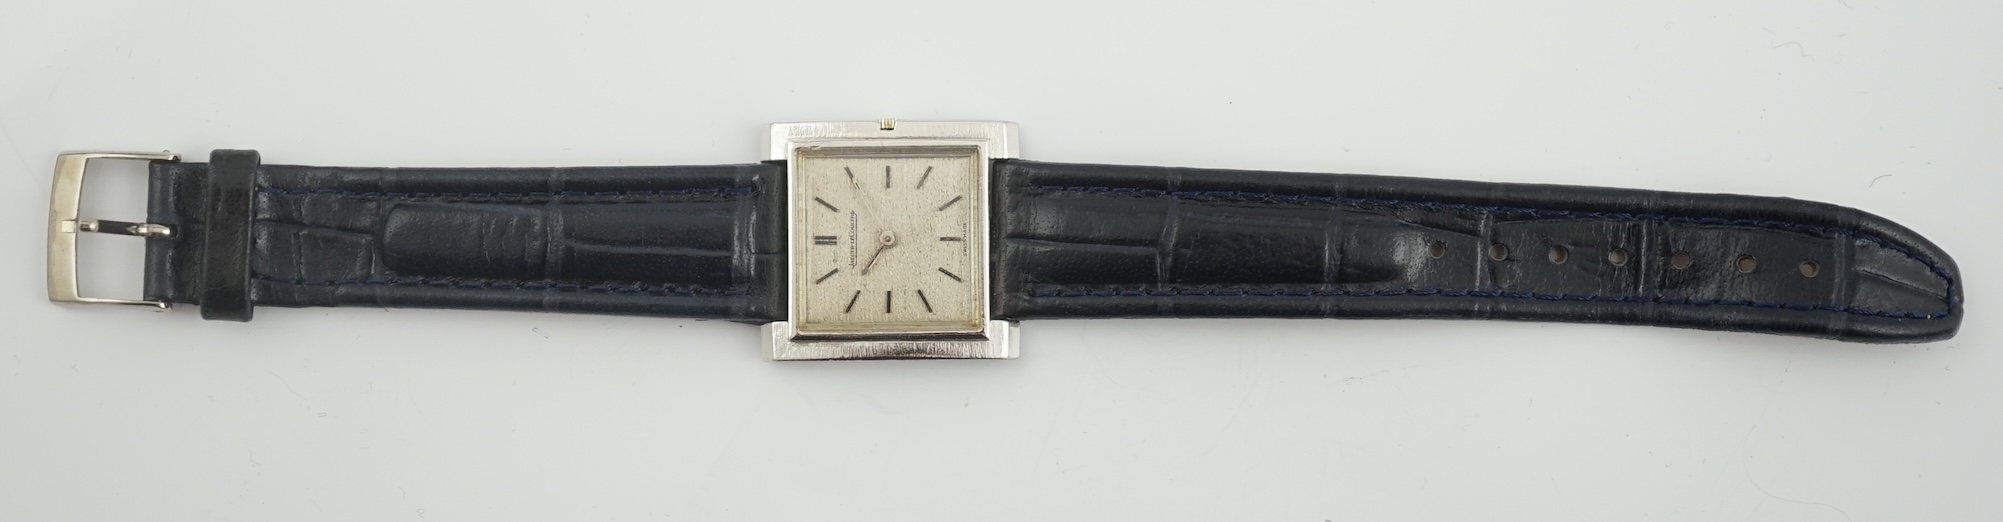 A gentleman's 18ct white gold Jaeger LeCoultre manual wind dress wrist watch